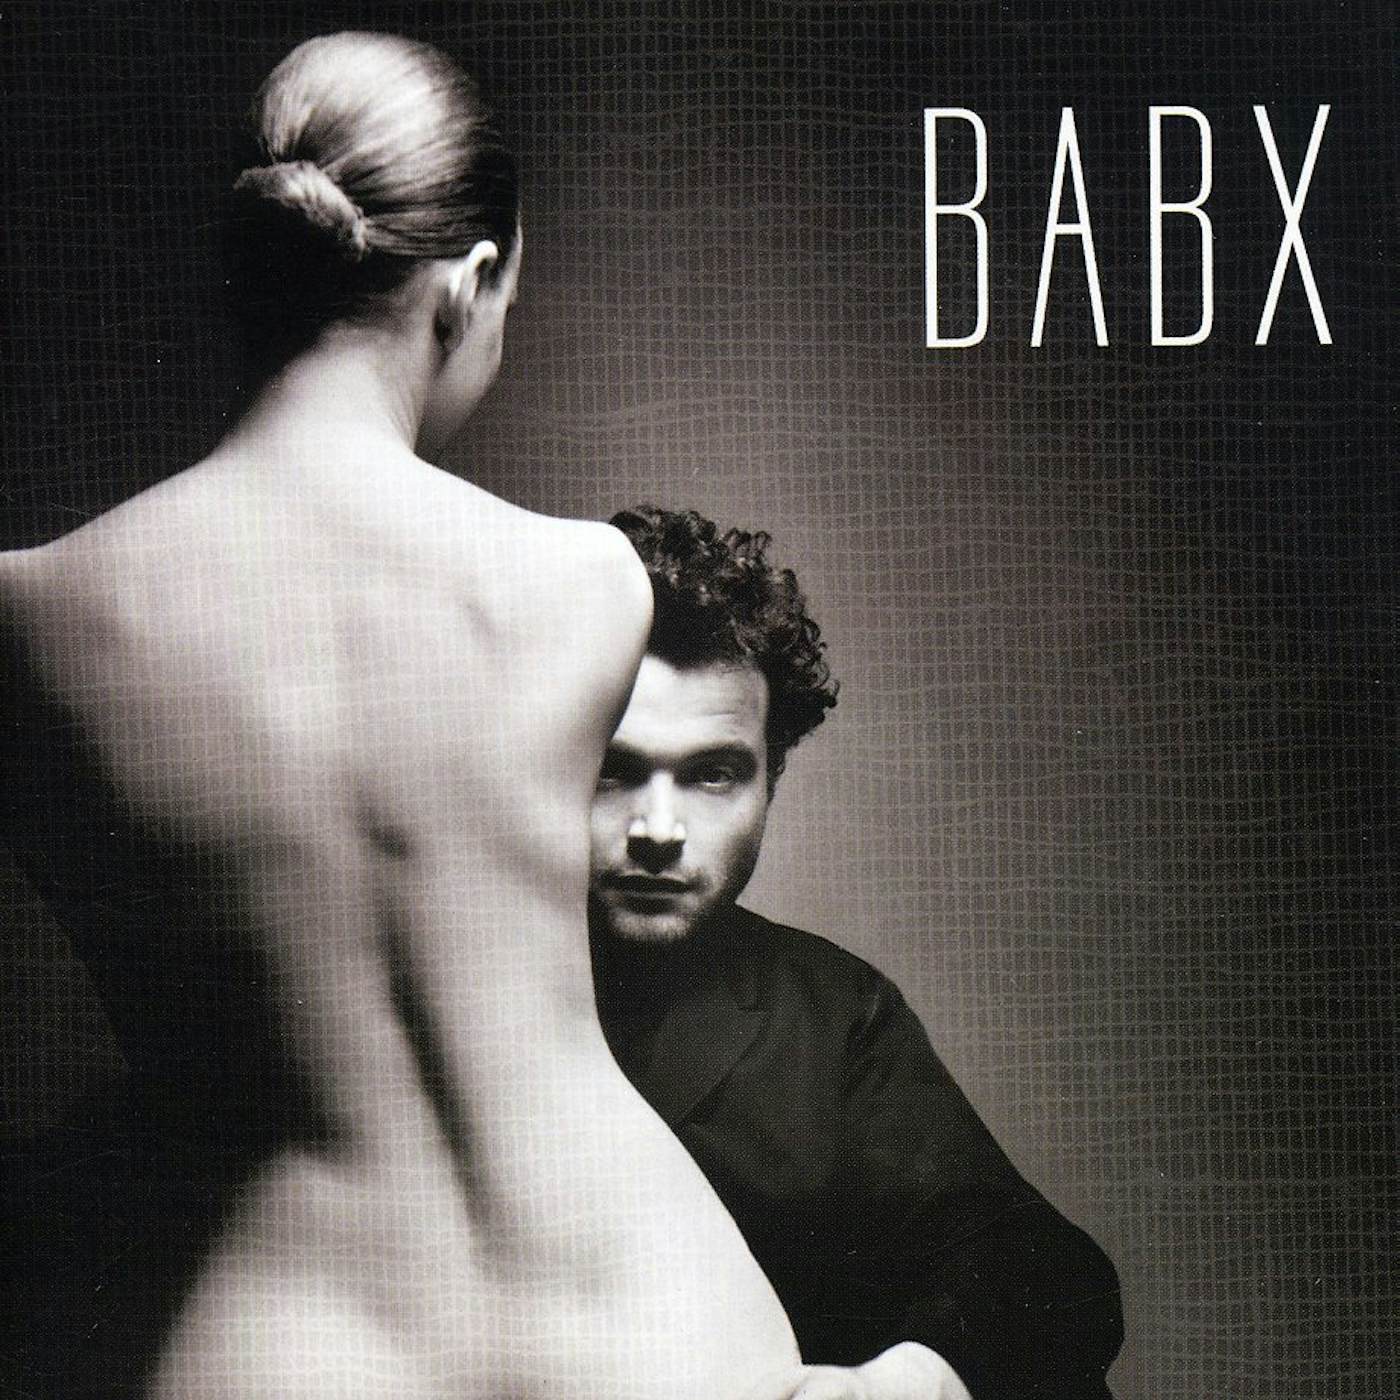 BABX CD